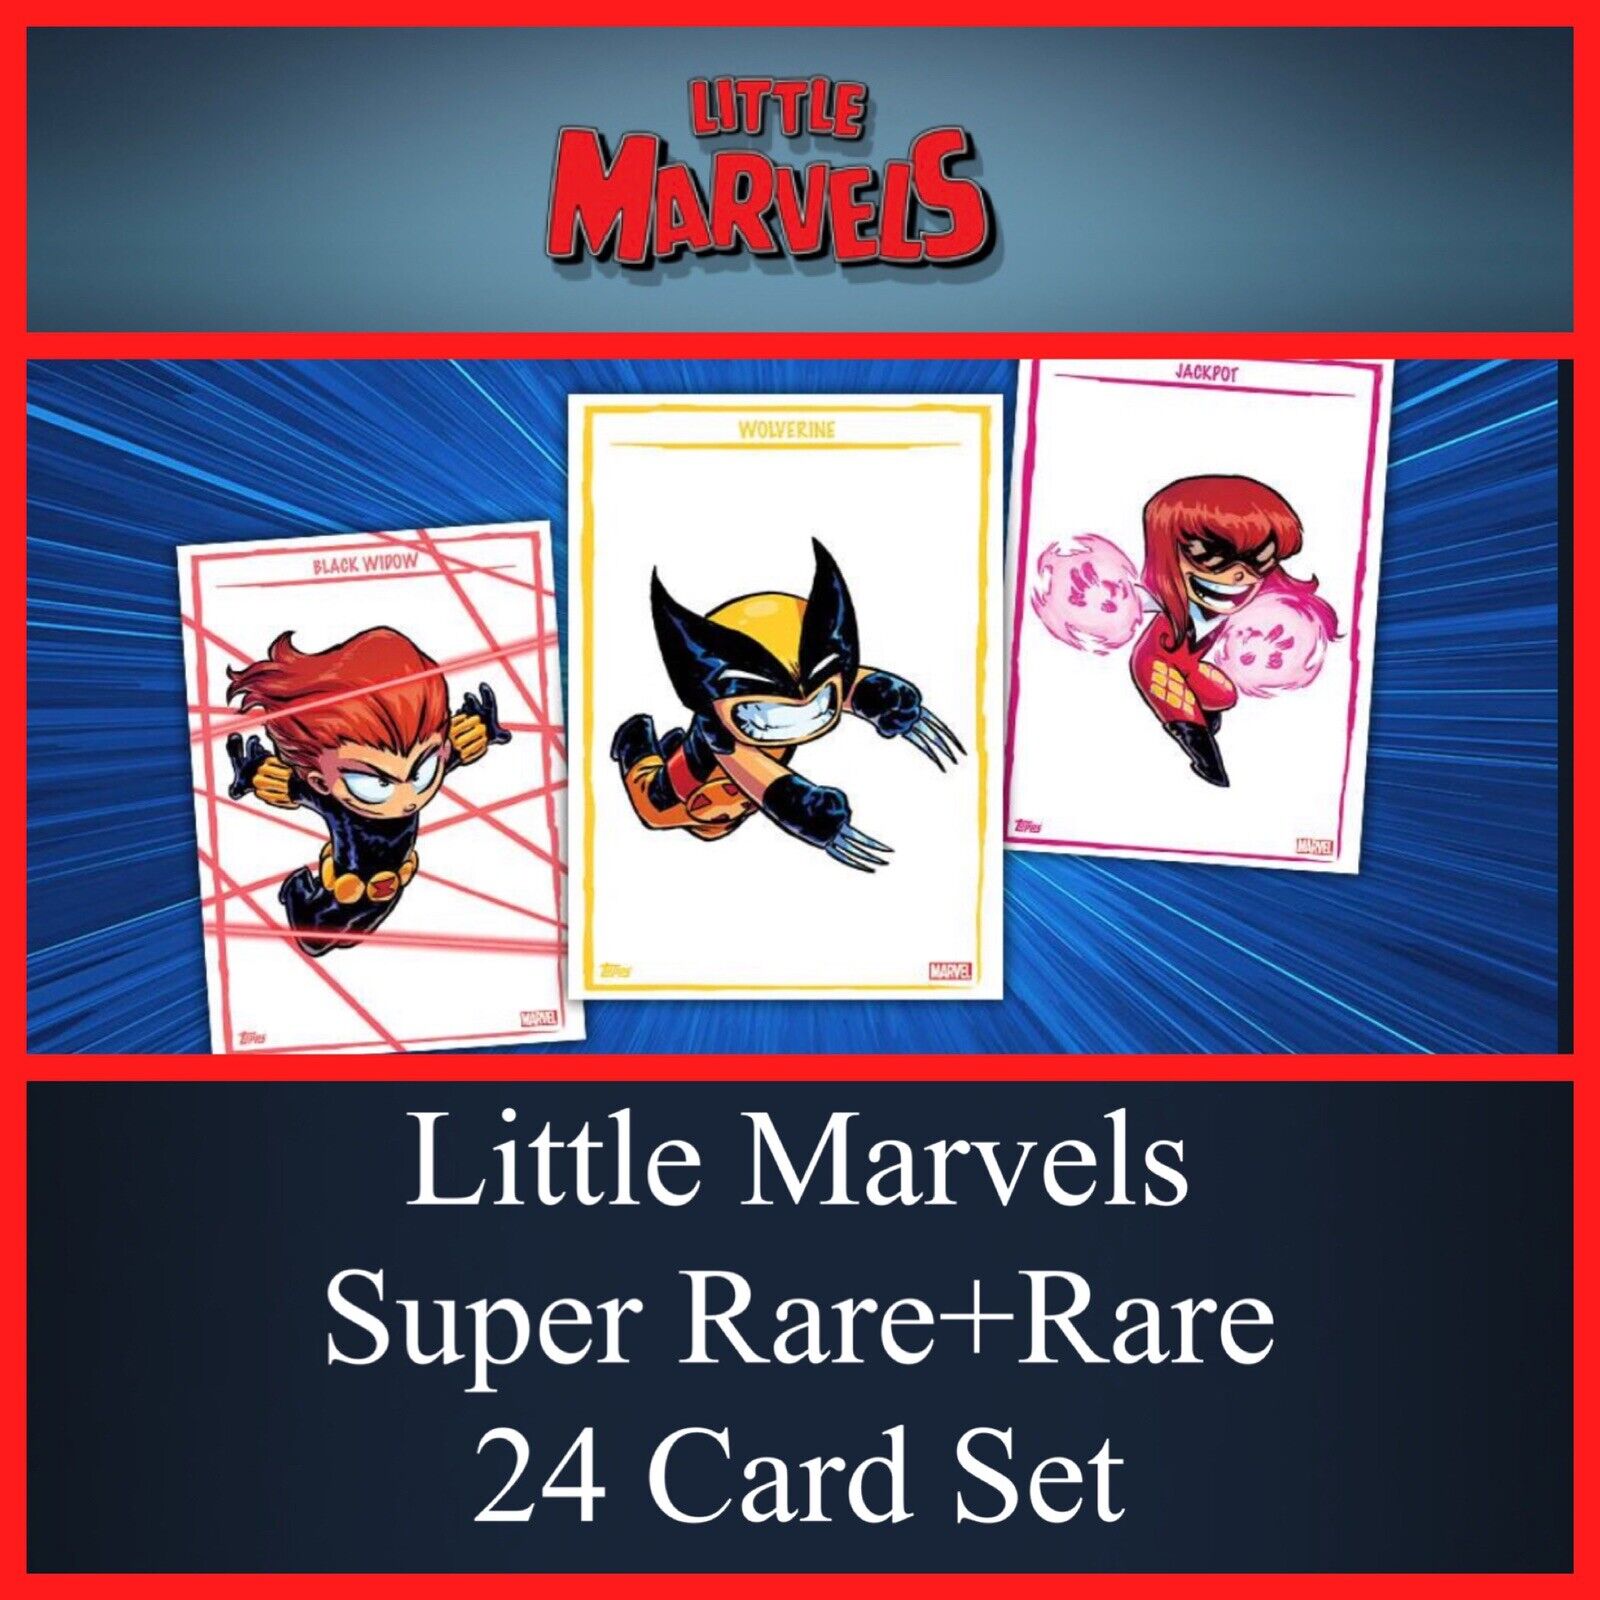 LITTLE MARVELS SUPER RARE+RARE 24 CARD SET-TOPPS MARVEL COLLECT DIGITAL